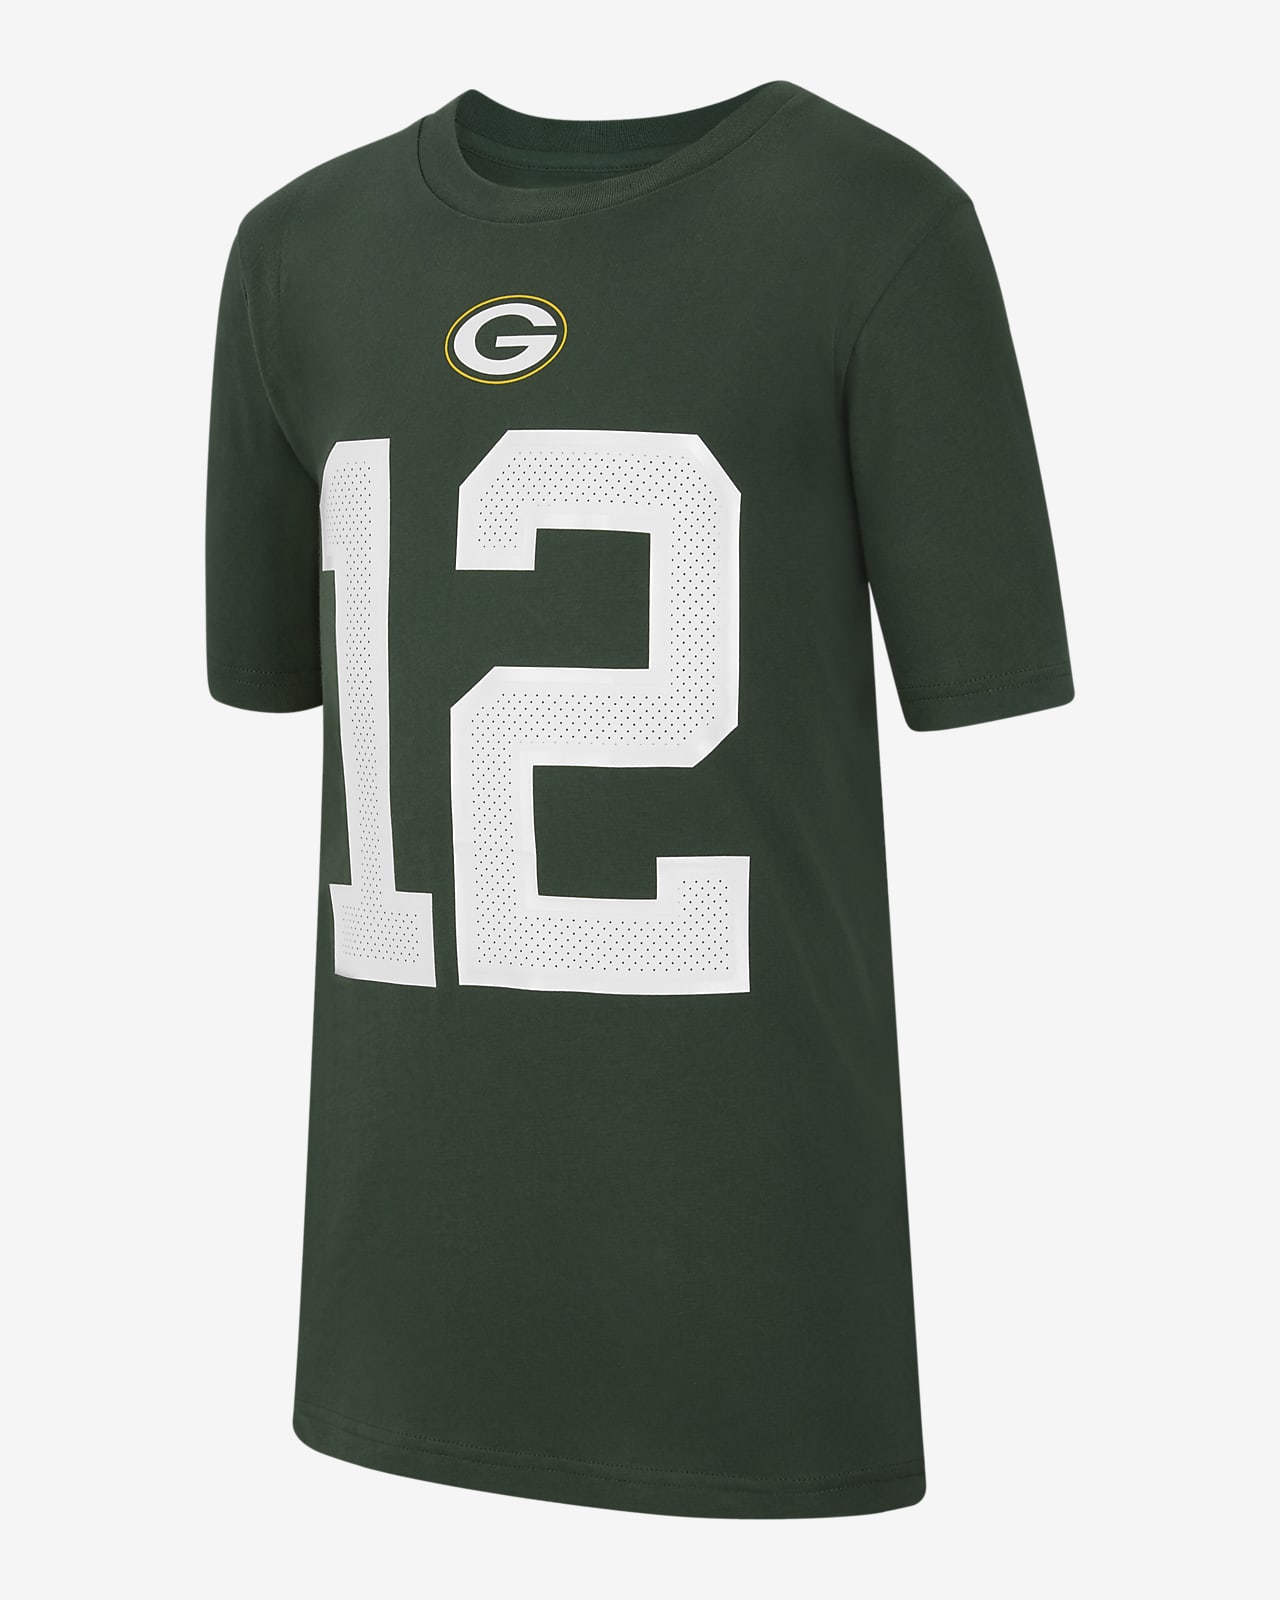 T-shirt Nike (NFL Green Bay Packers) - Ragazzi